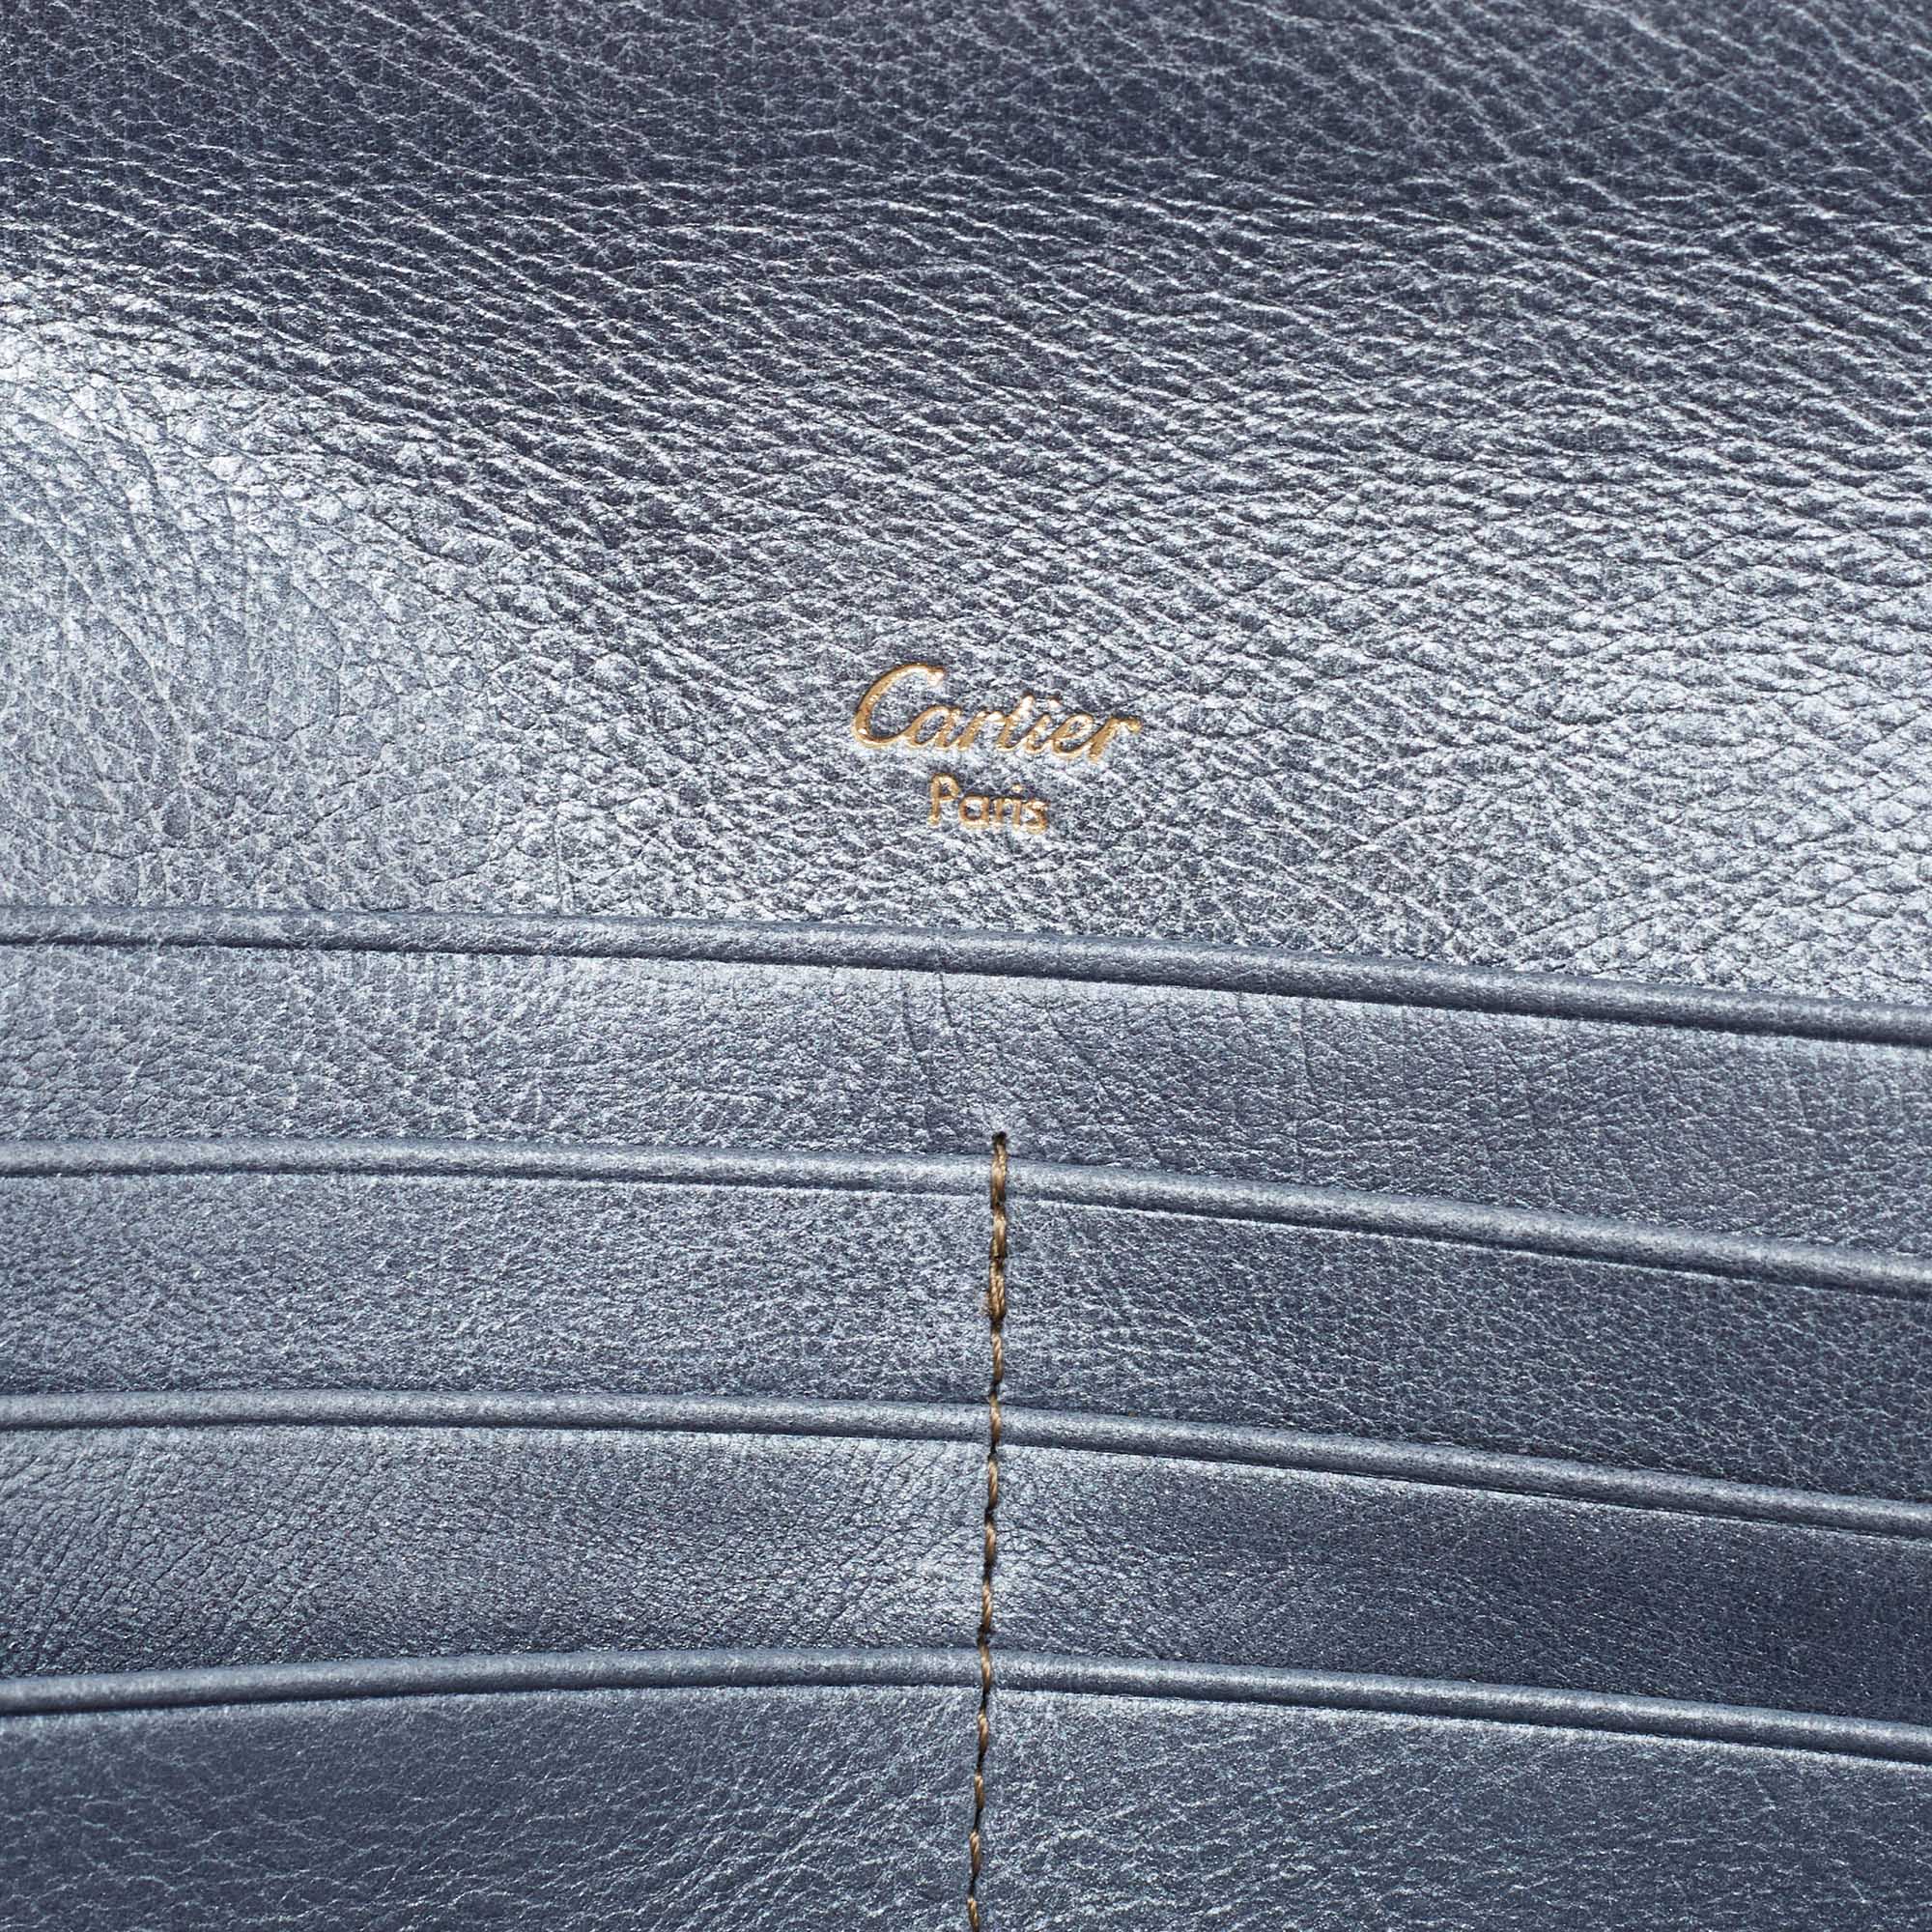 Cartier Grey Leather Marcello De Cartier Flap Wallet